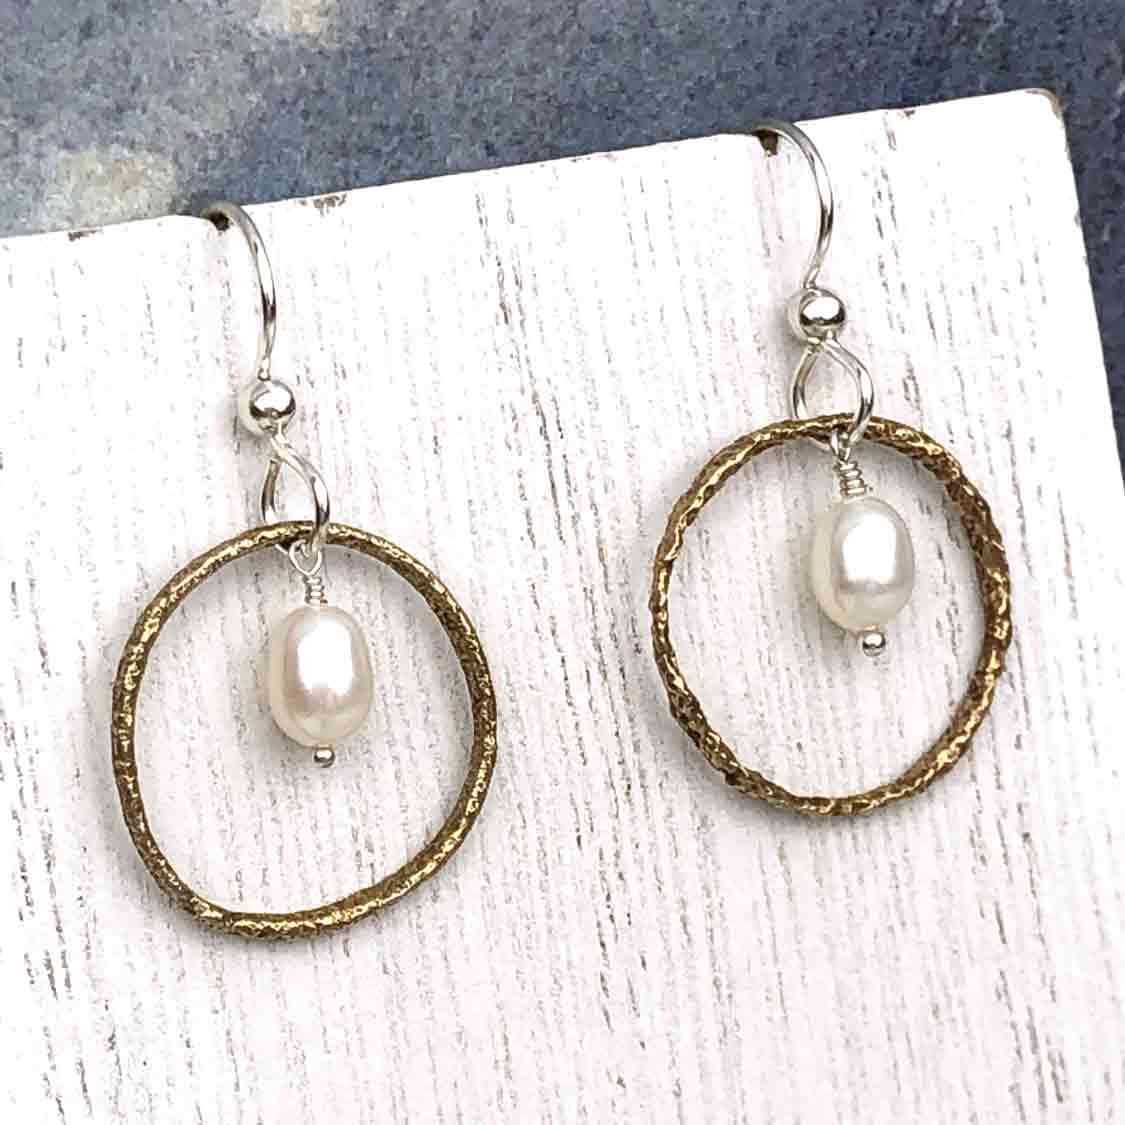 Glistening Golden Bronze Celtic Ring Money Earrings with Genuine Pearls